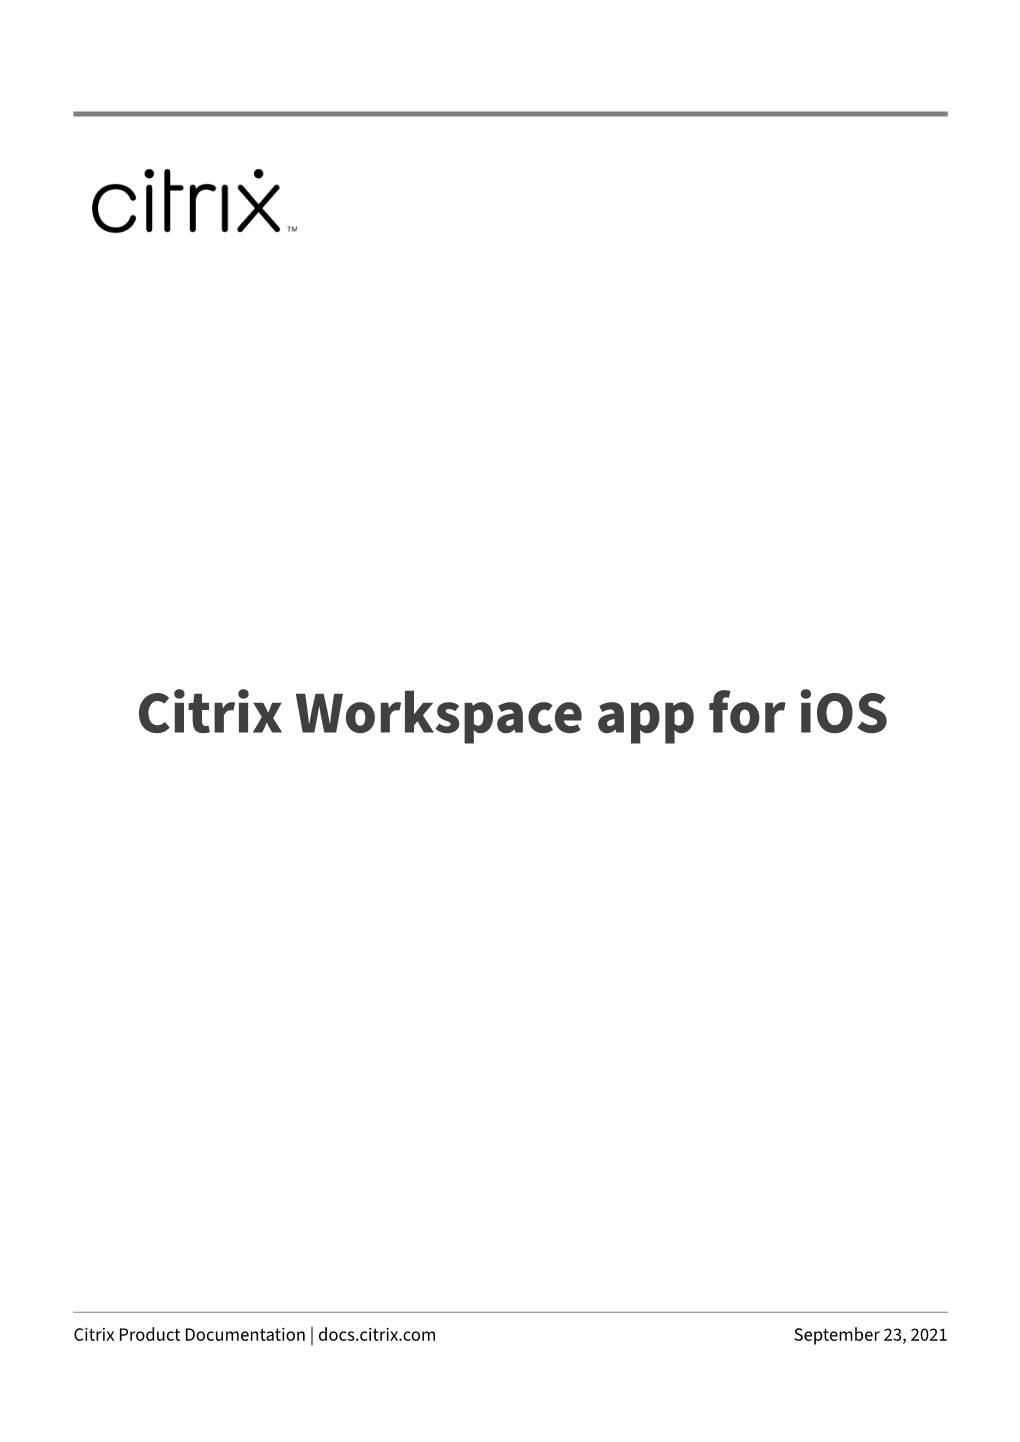 Citrix Workspace App for Ios